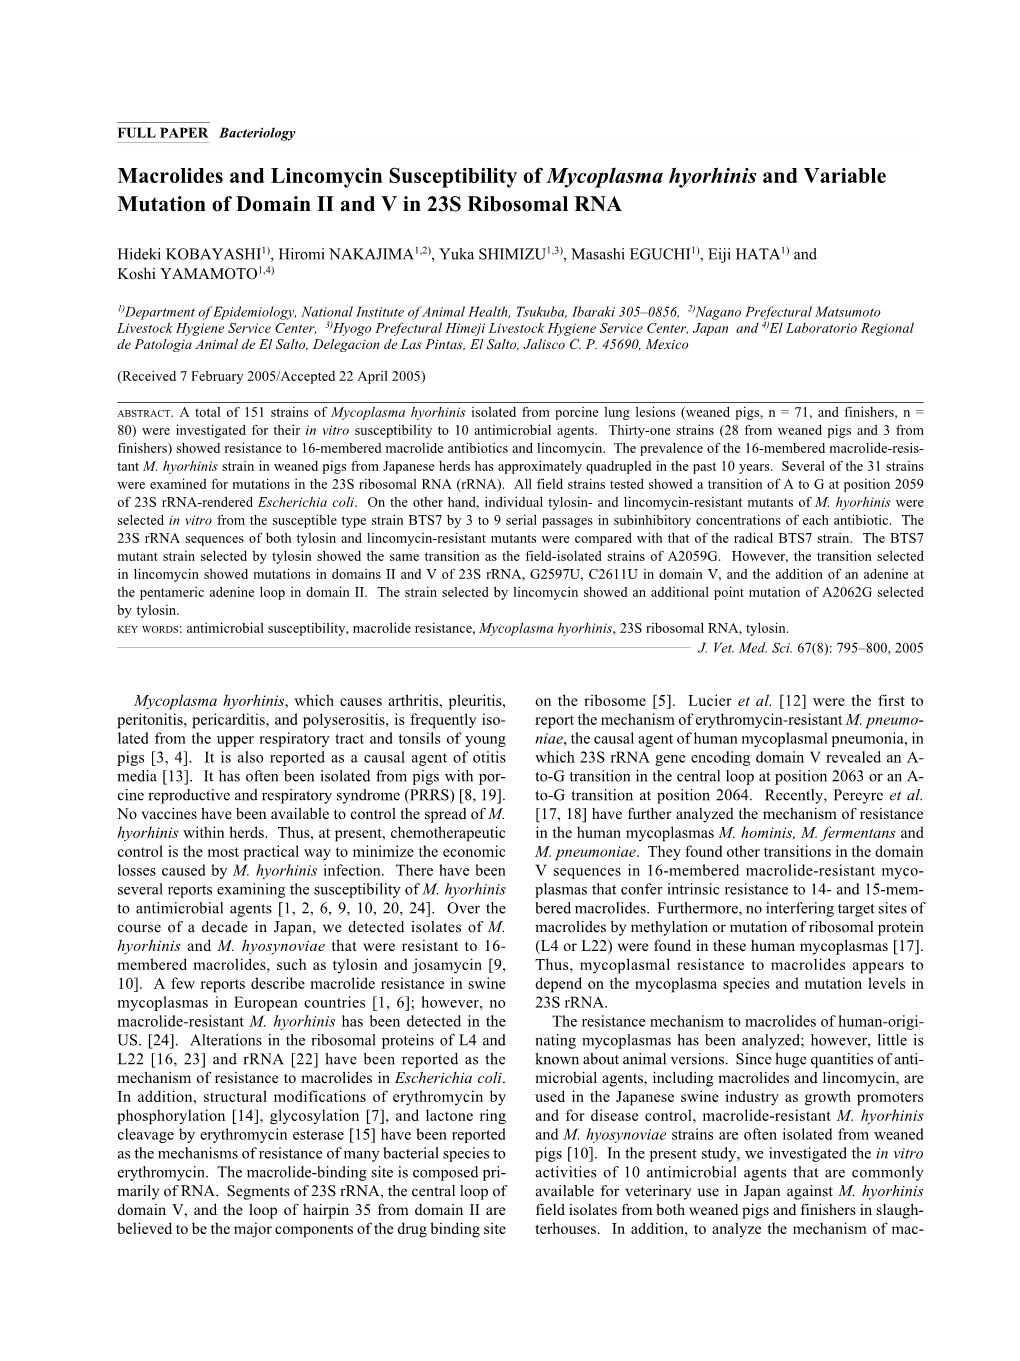 Macrolides and Lincomycin Susceptibility of Mycoplasma Hyorhinis and Variable Mutation of Domain II and V in 23S Ribosomal RNA